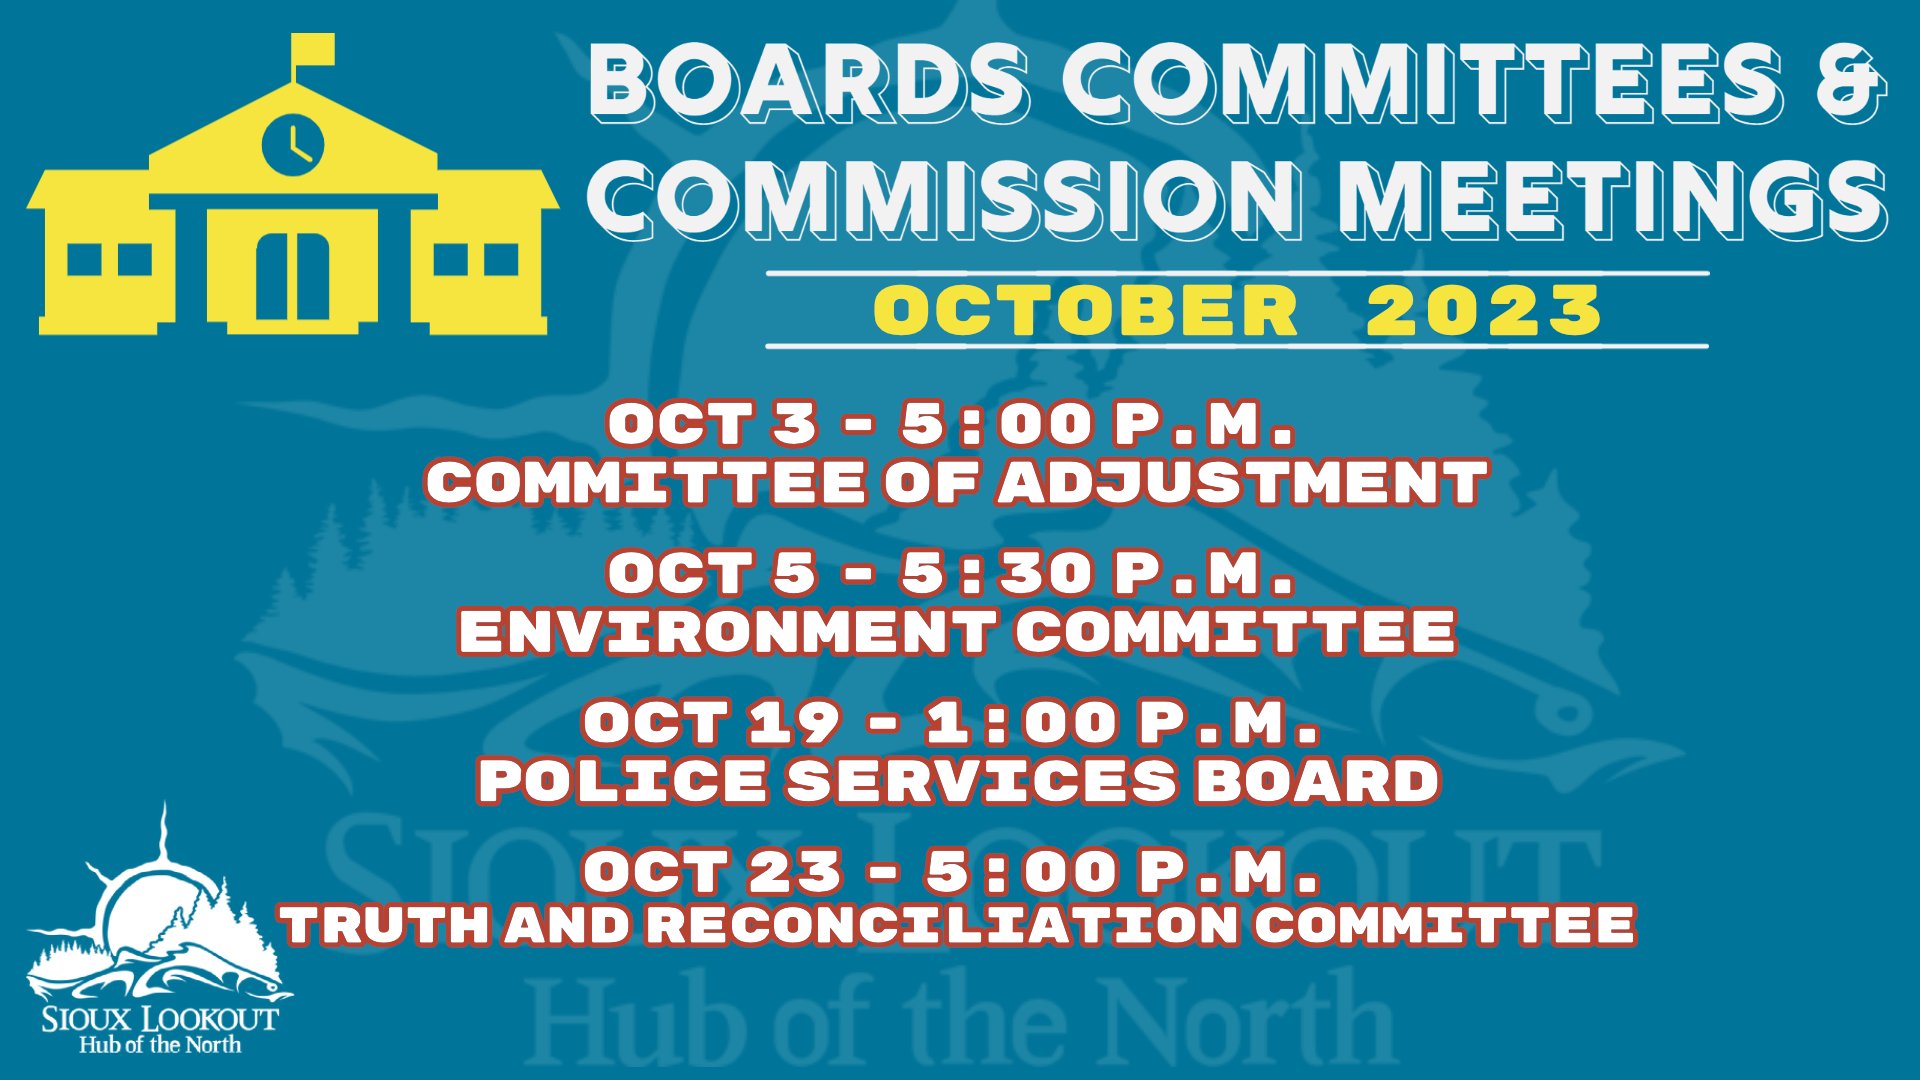 Board and Committee Meetings - October 2023